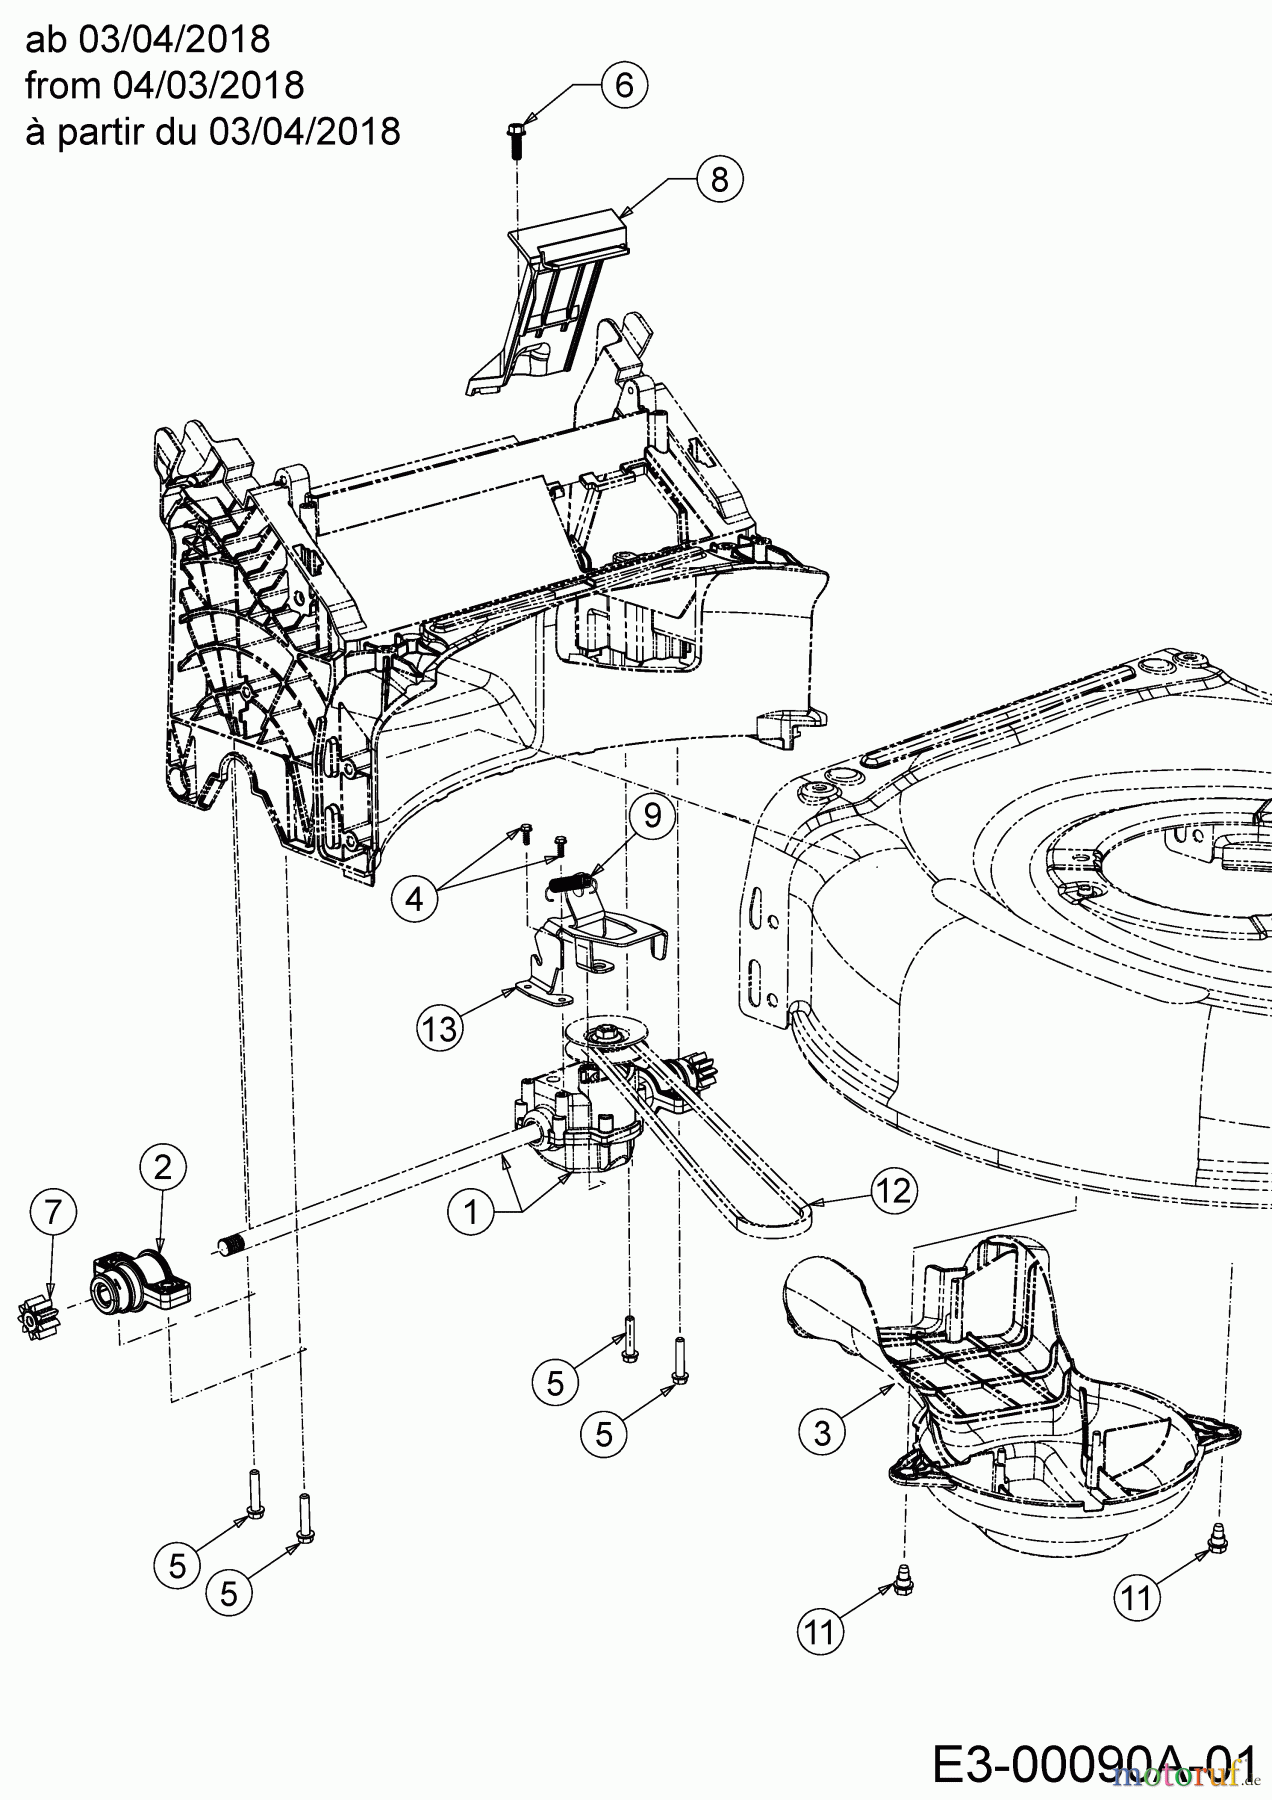  MTD Petrol mower self propelled SP 53 HWBS 12A-PF7B600  (2018) Gearbox, Belt from 04/03/2018